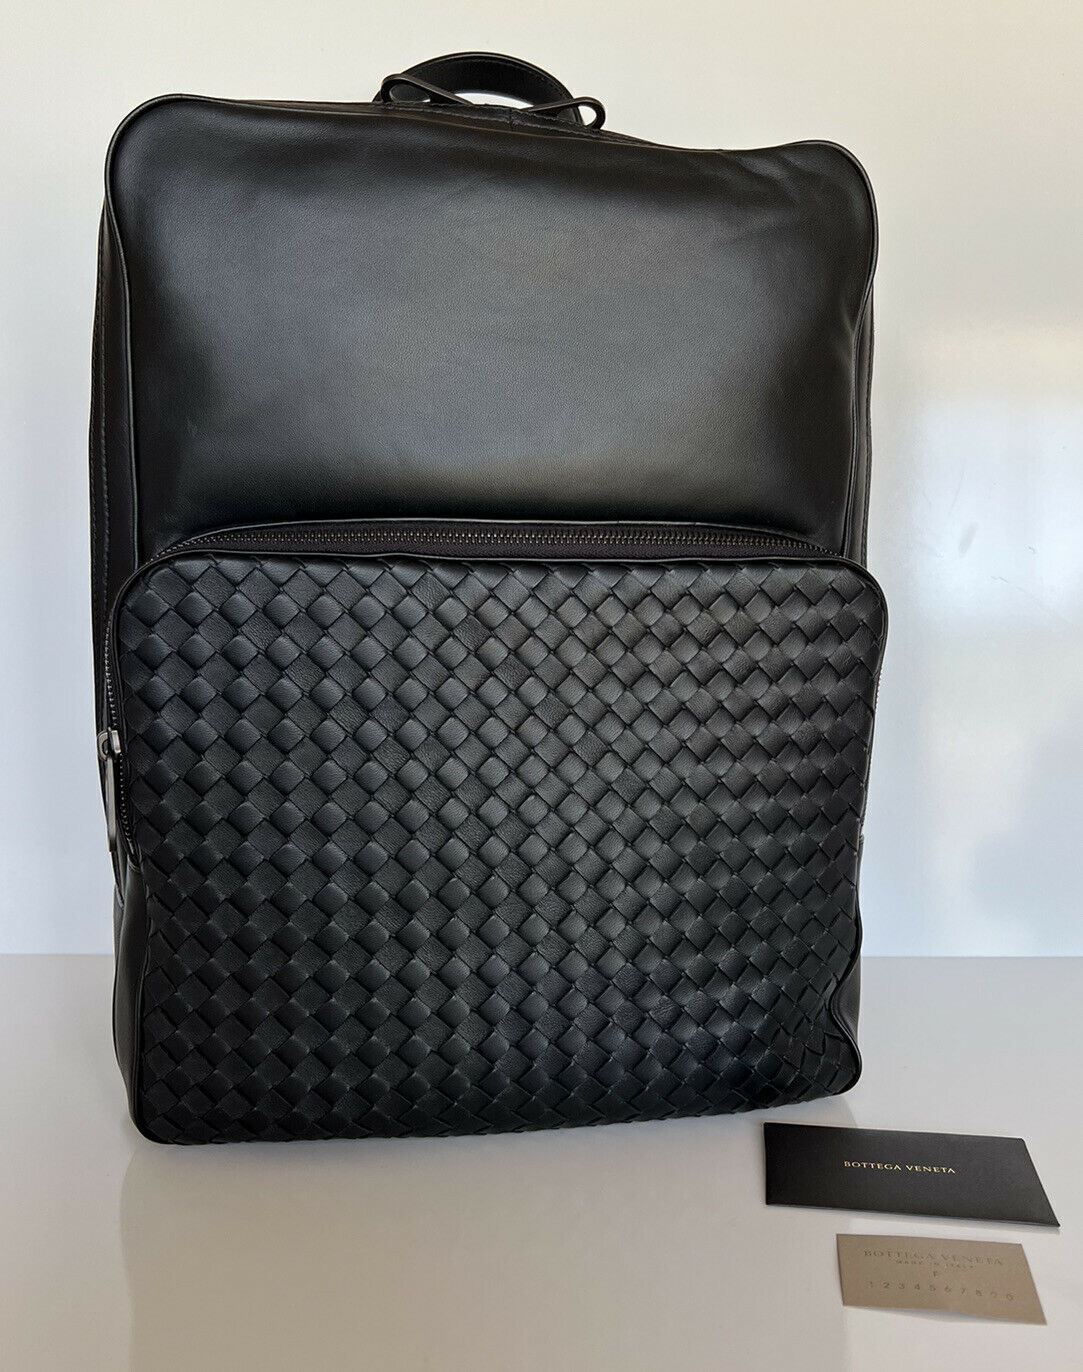 NWT $2870 Bottega Veneta Leather Intrecciato Backpack Black Made in Italy 493805